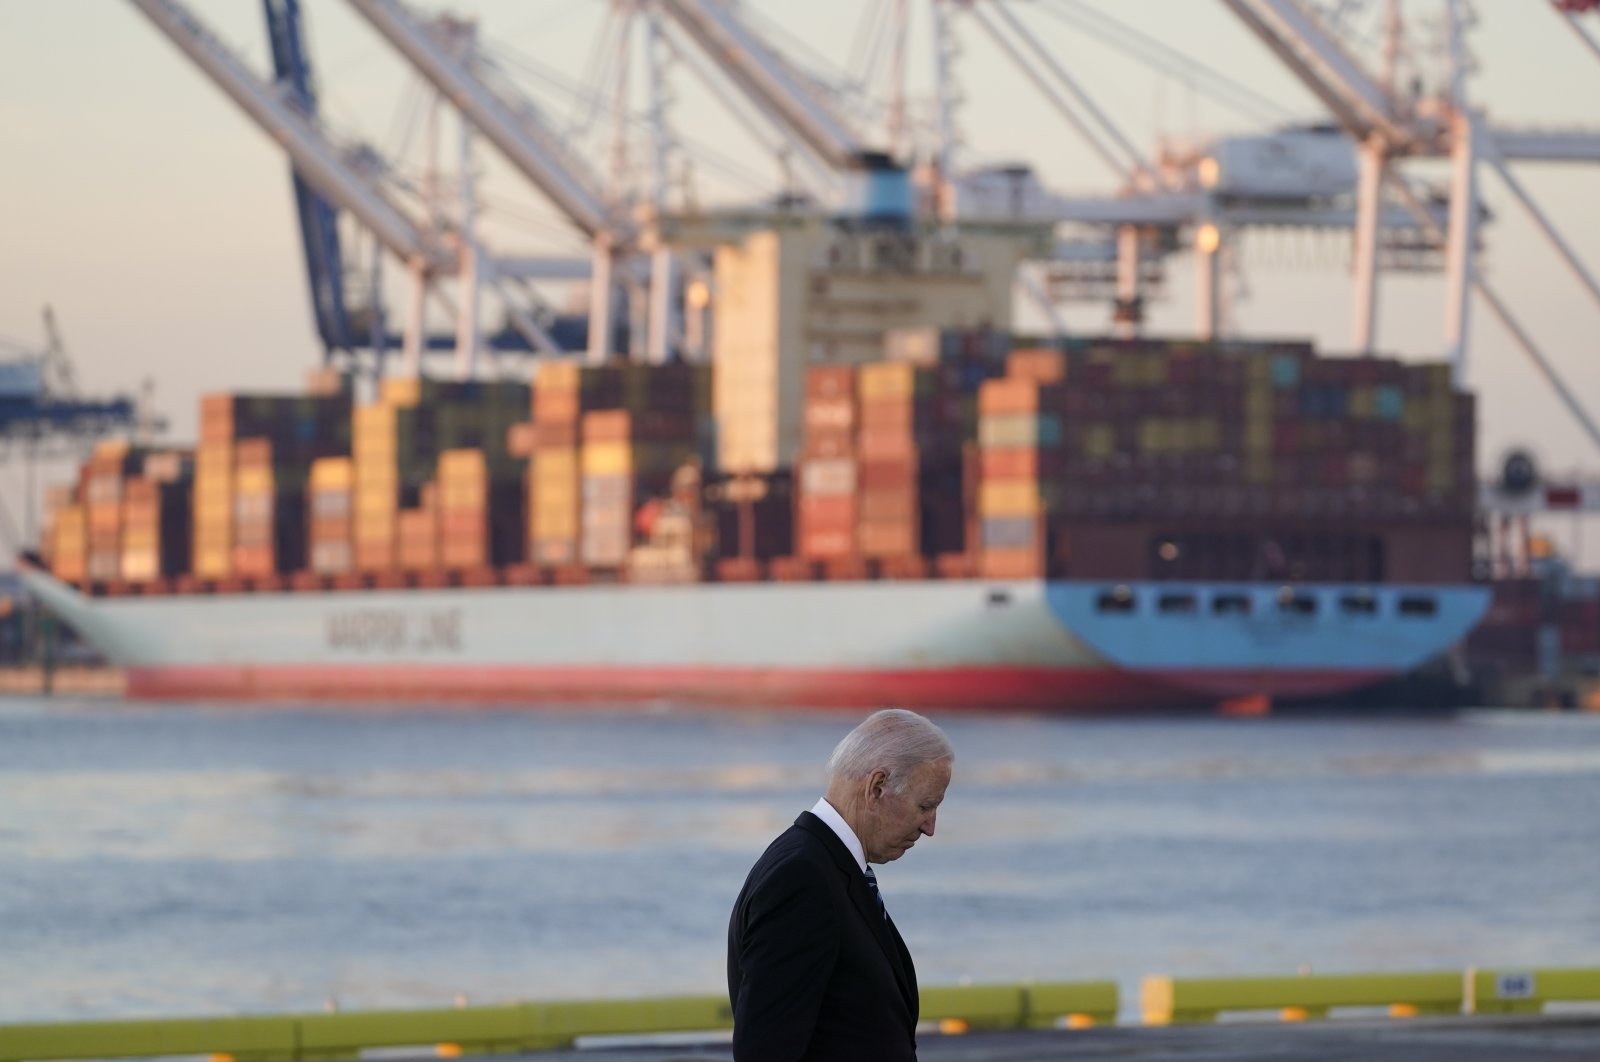 U.S. President Joe Biden departs after speaking during his visit to the Port of Baltimore, U.S., Nov. 10, 2021. (AP Photo)